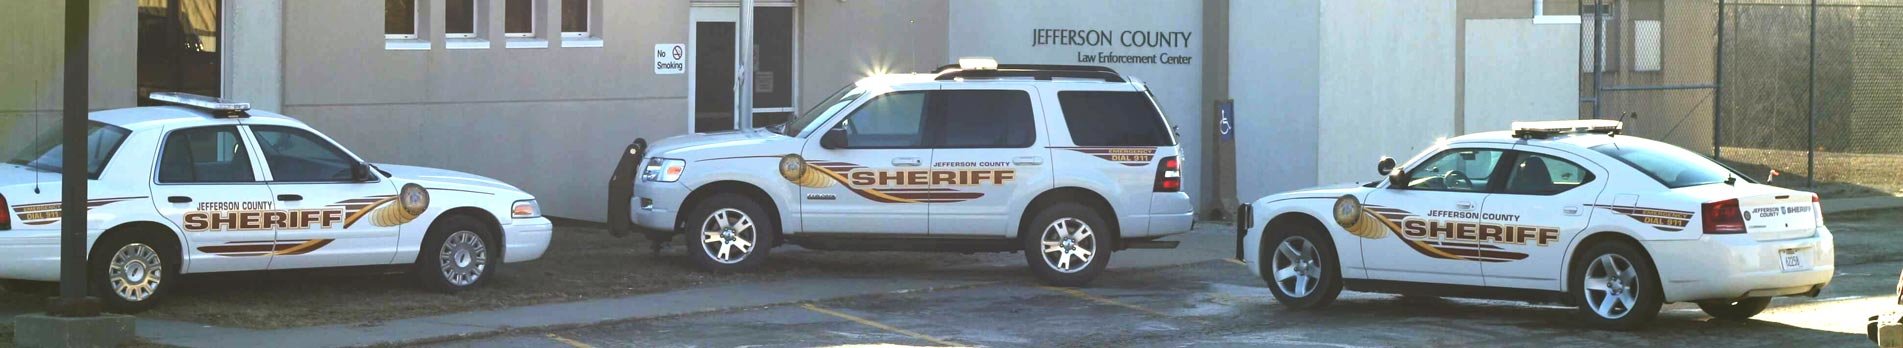 Jefferson County, Kansas Sheriff's Office Homepage Slideshow